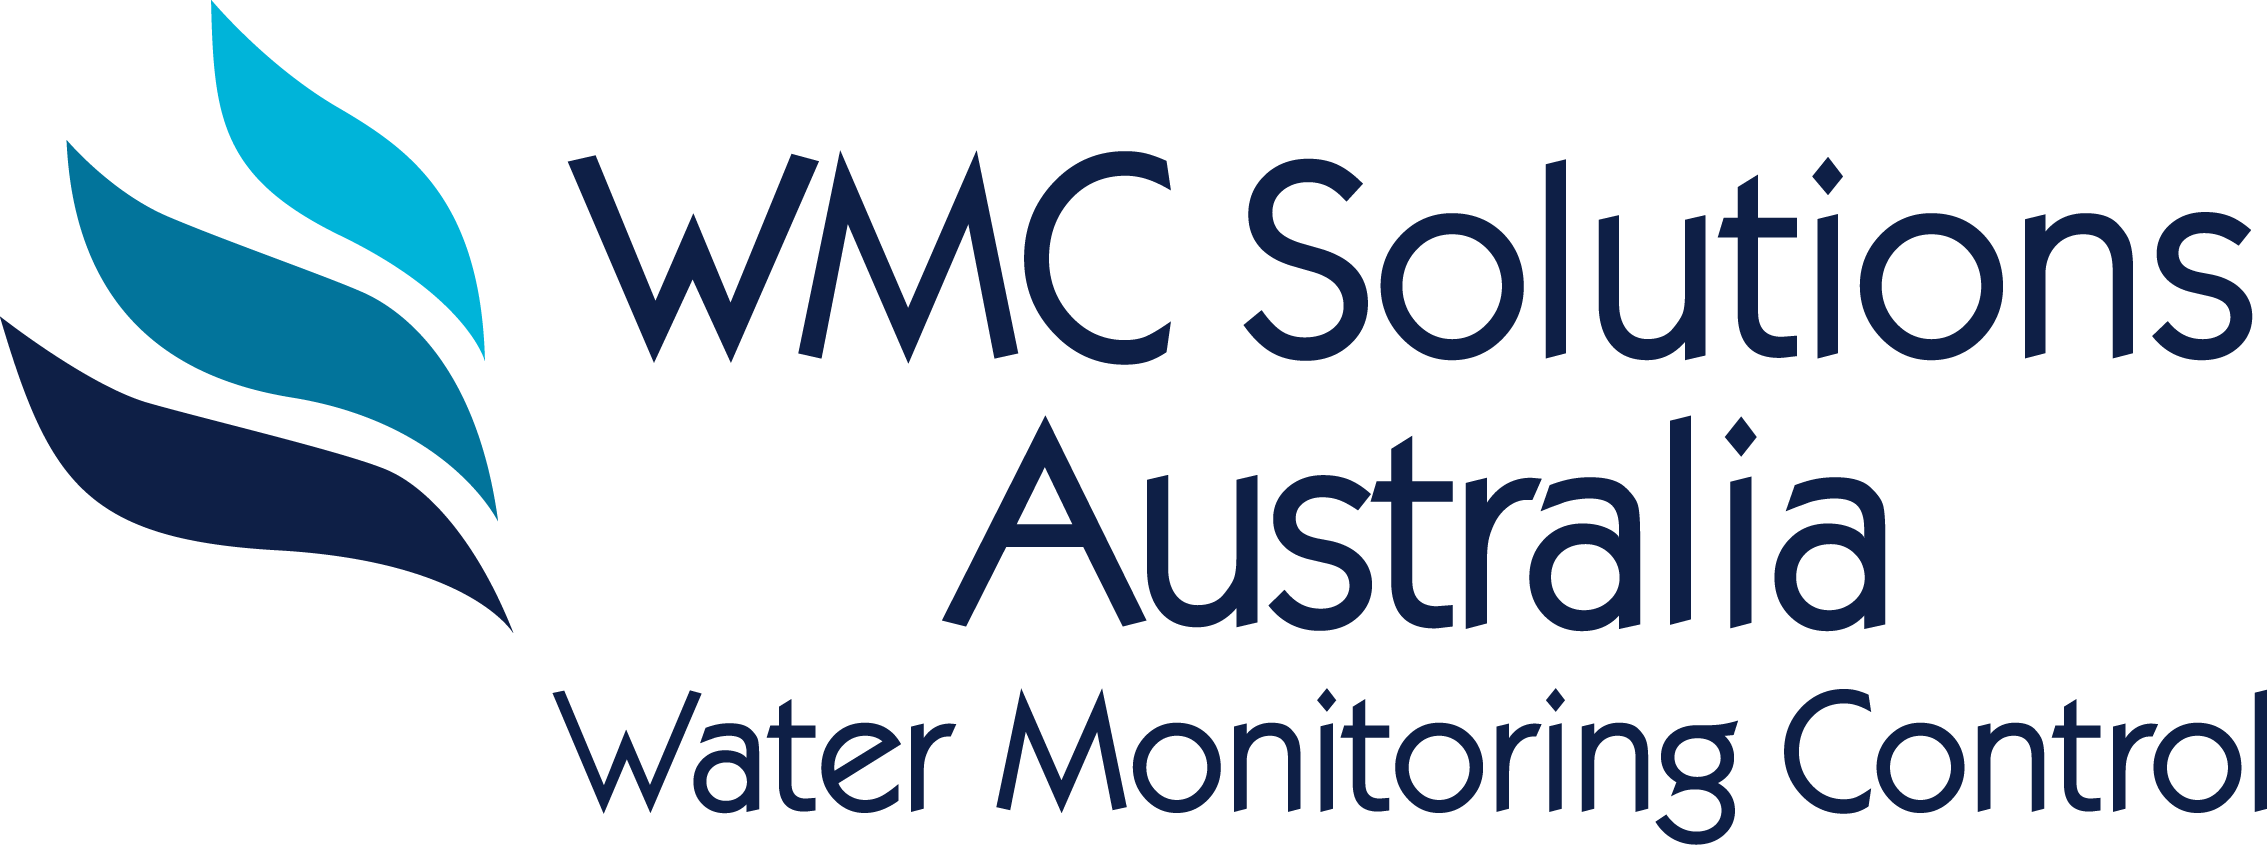 Water Monitoring Control Australia